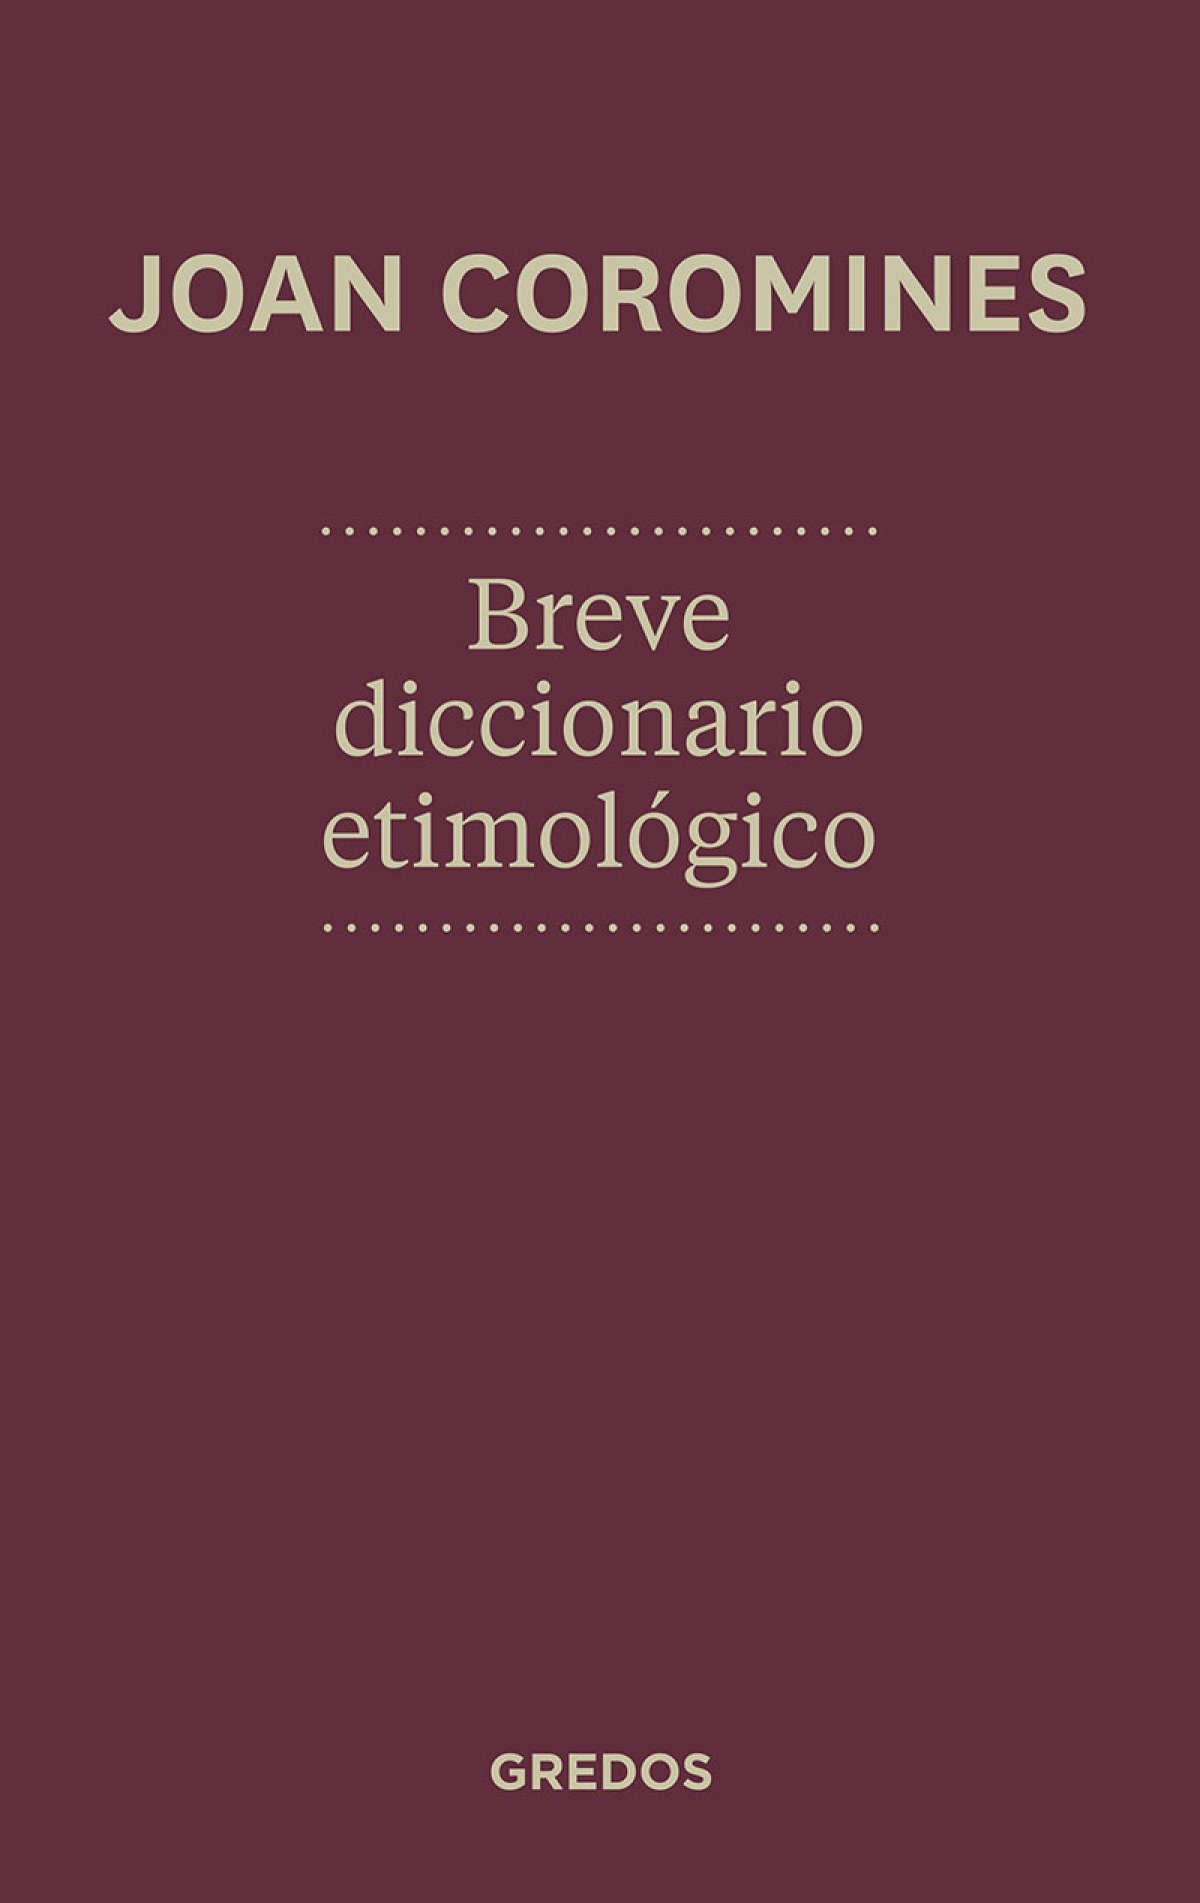 Breve diccionario etimologico 2012 - Coromines, Joan